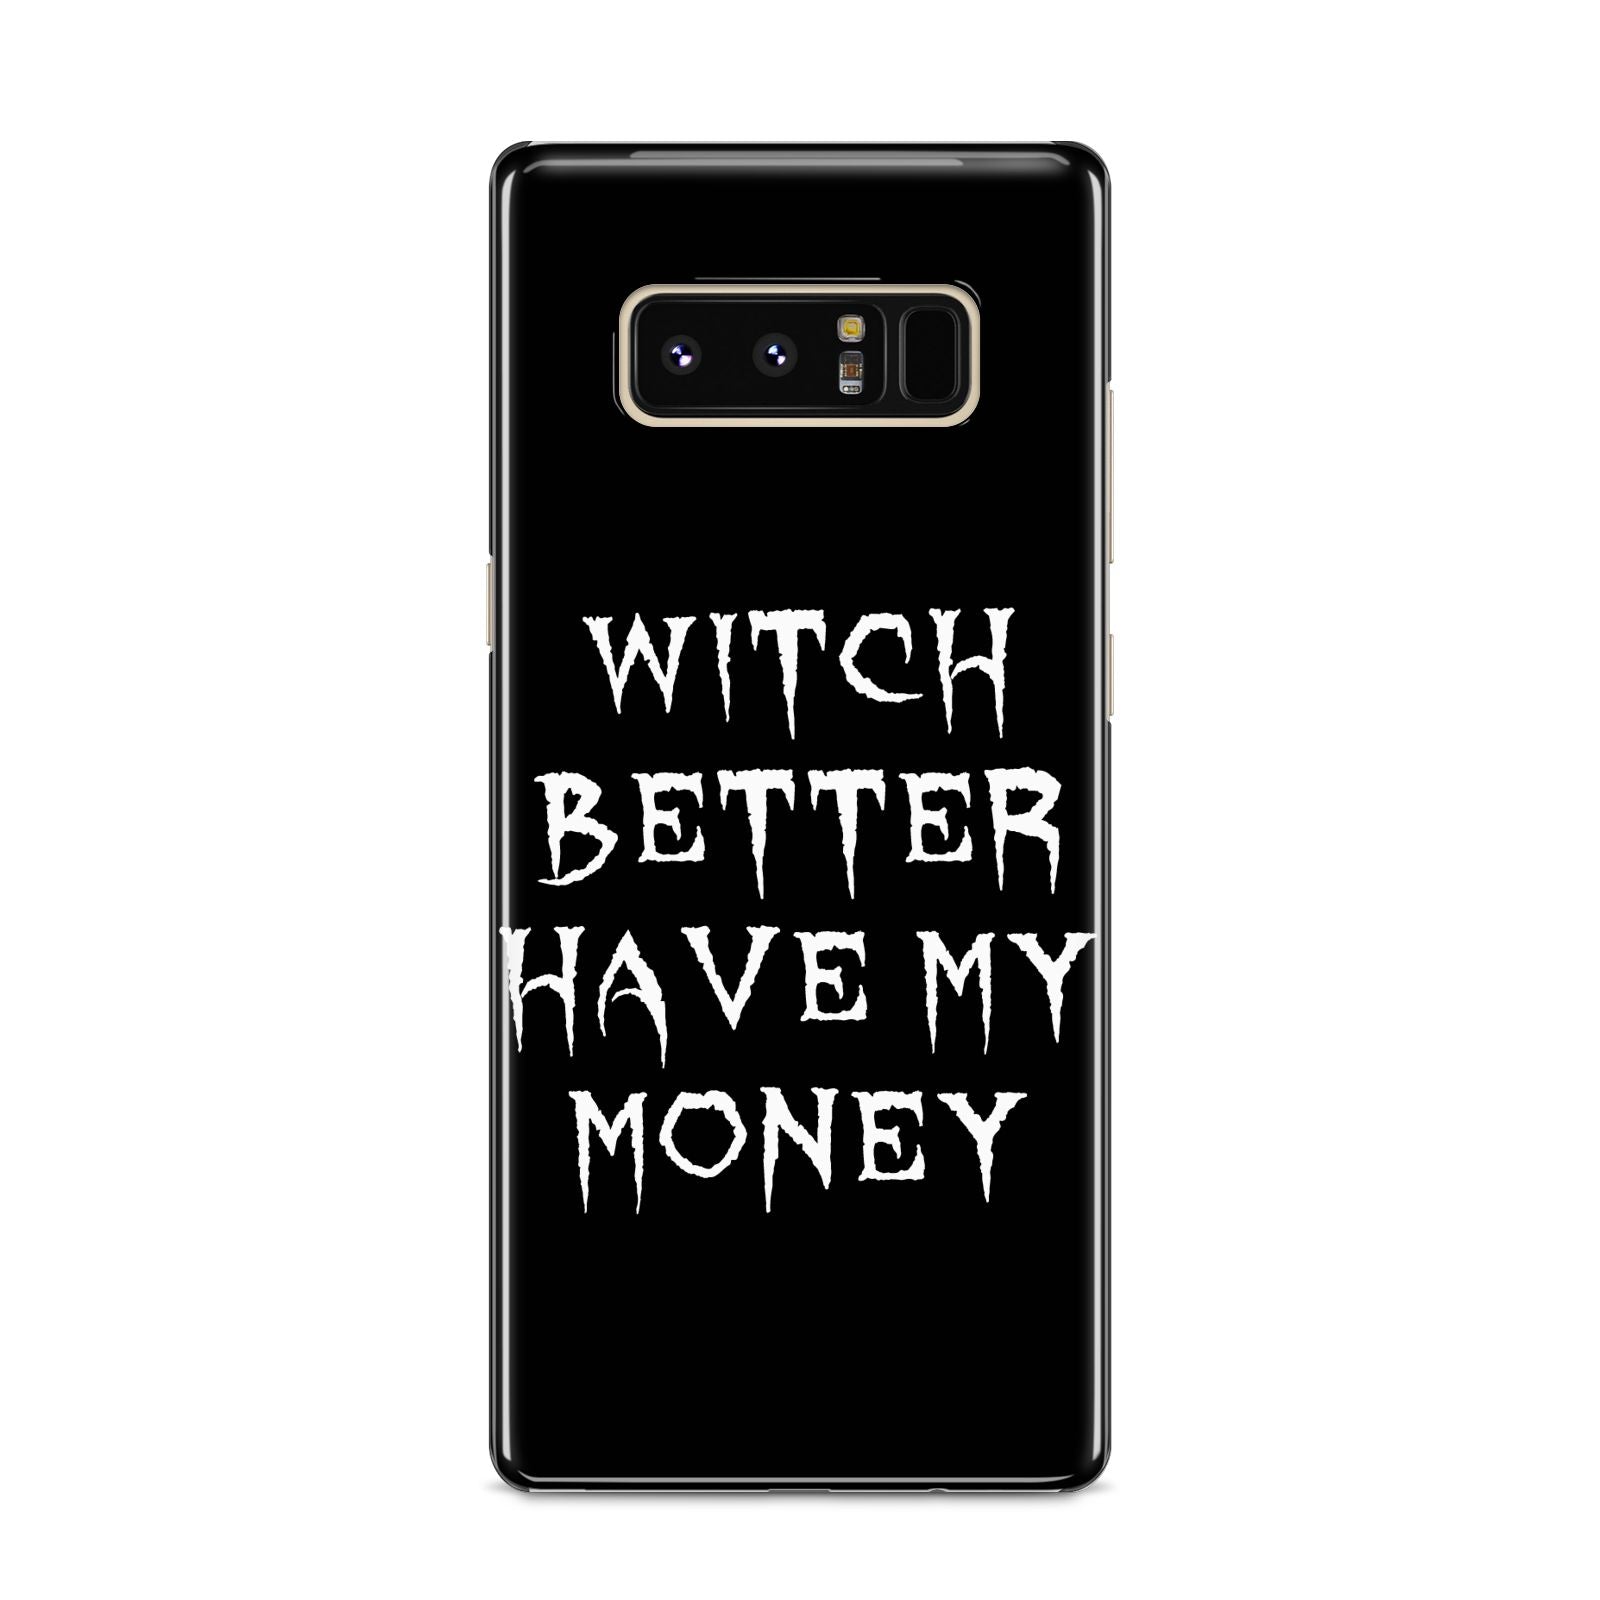 Witch Better Have My Money Samsung Galaxy S8 Case